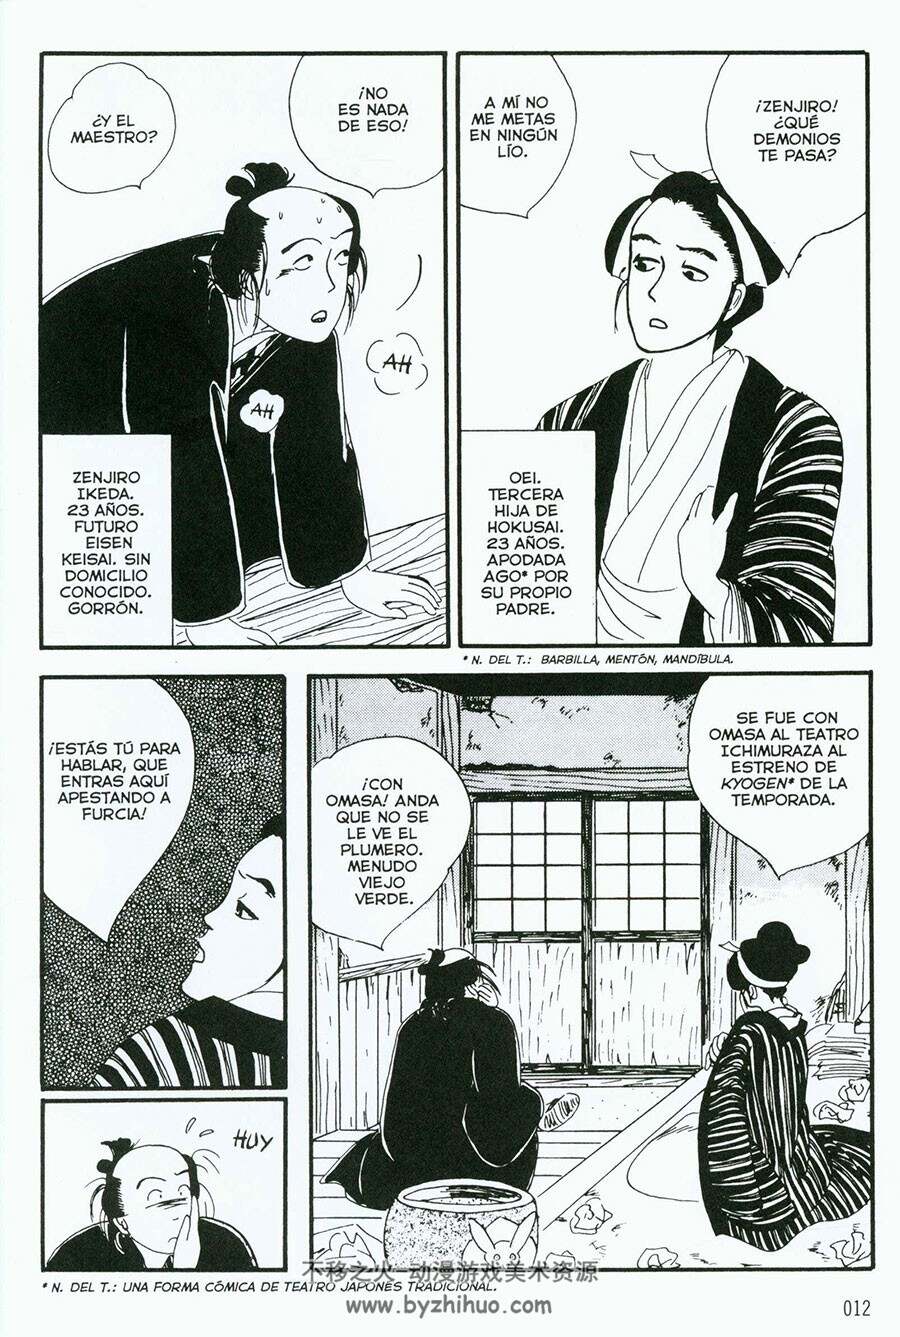 Miss Hokusa 第1-2卷 漫画下载